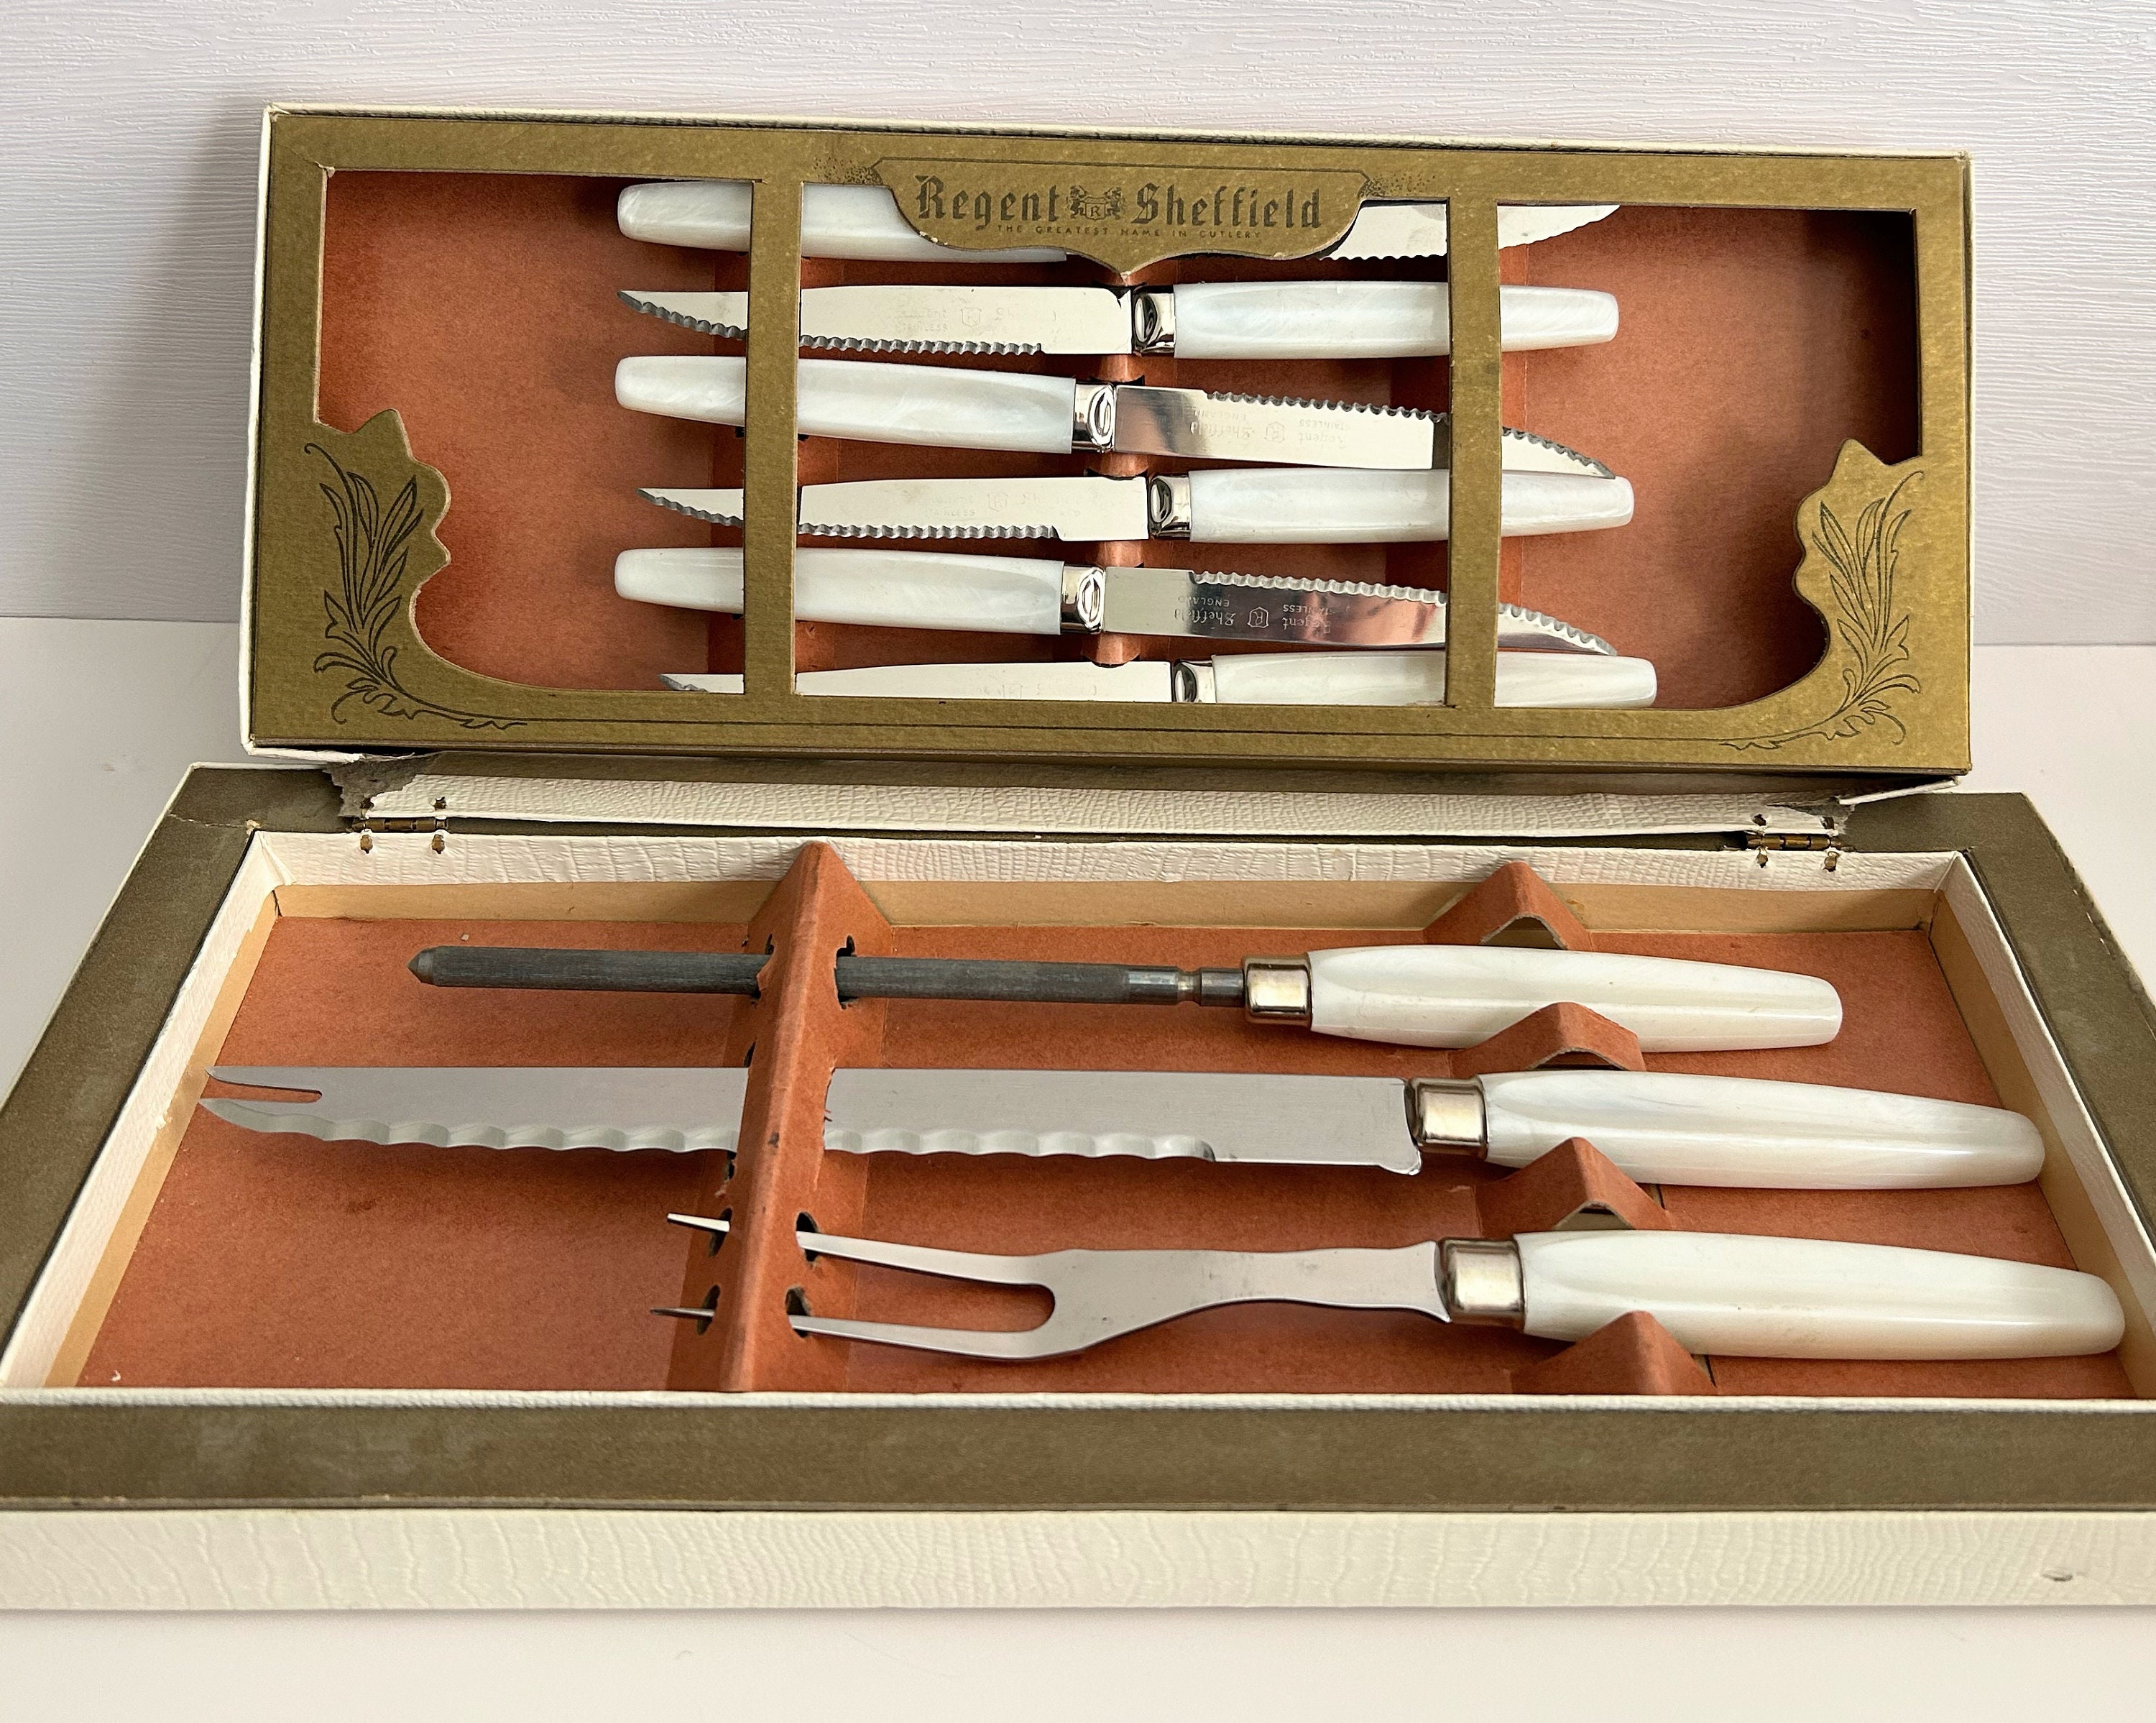 Assorted Vintage Knives by Flint Quikut Imperial Regent & 